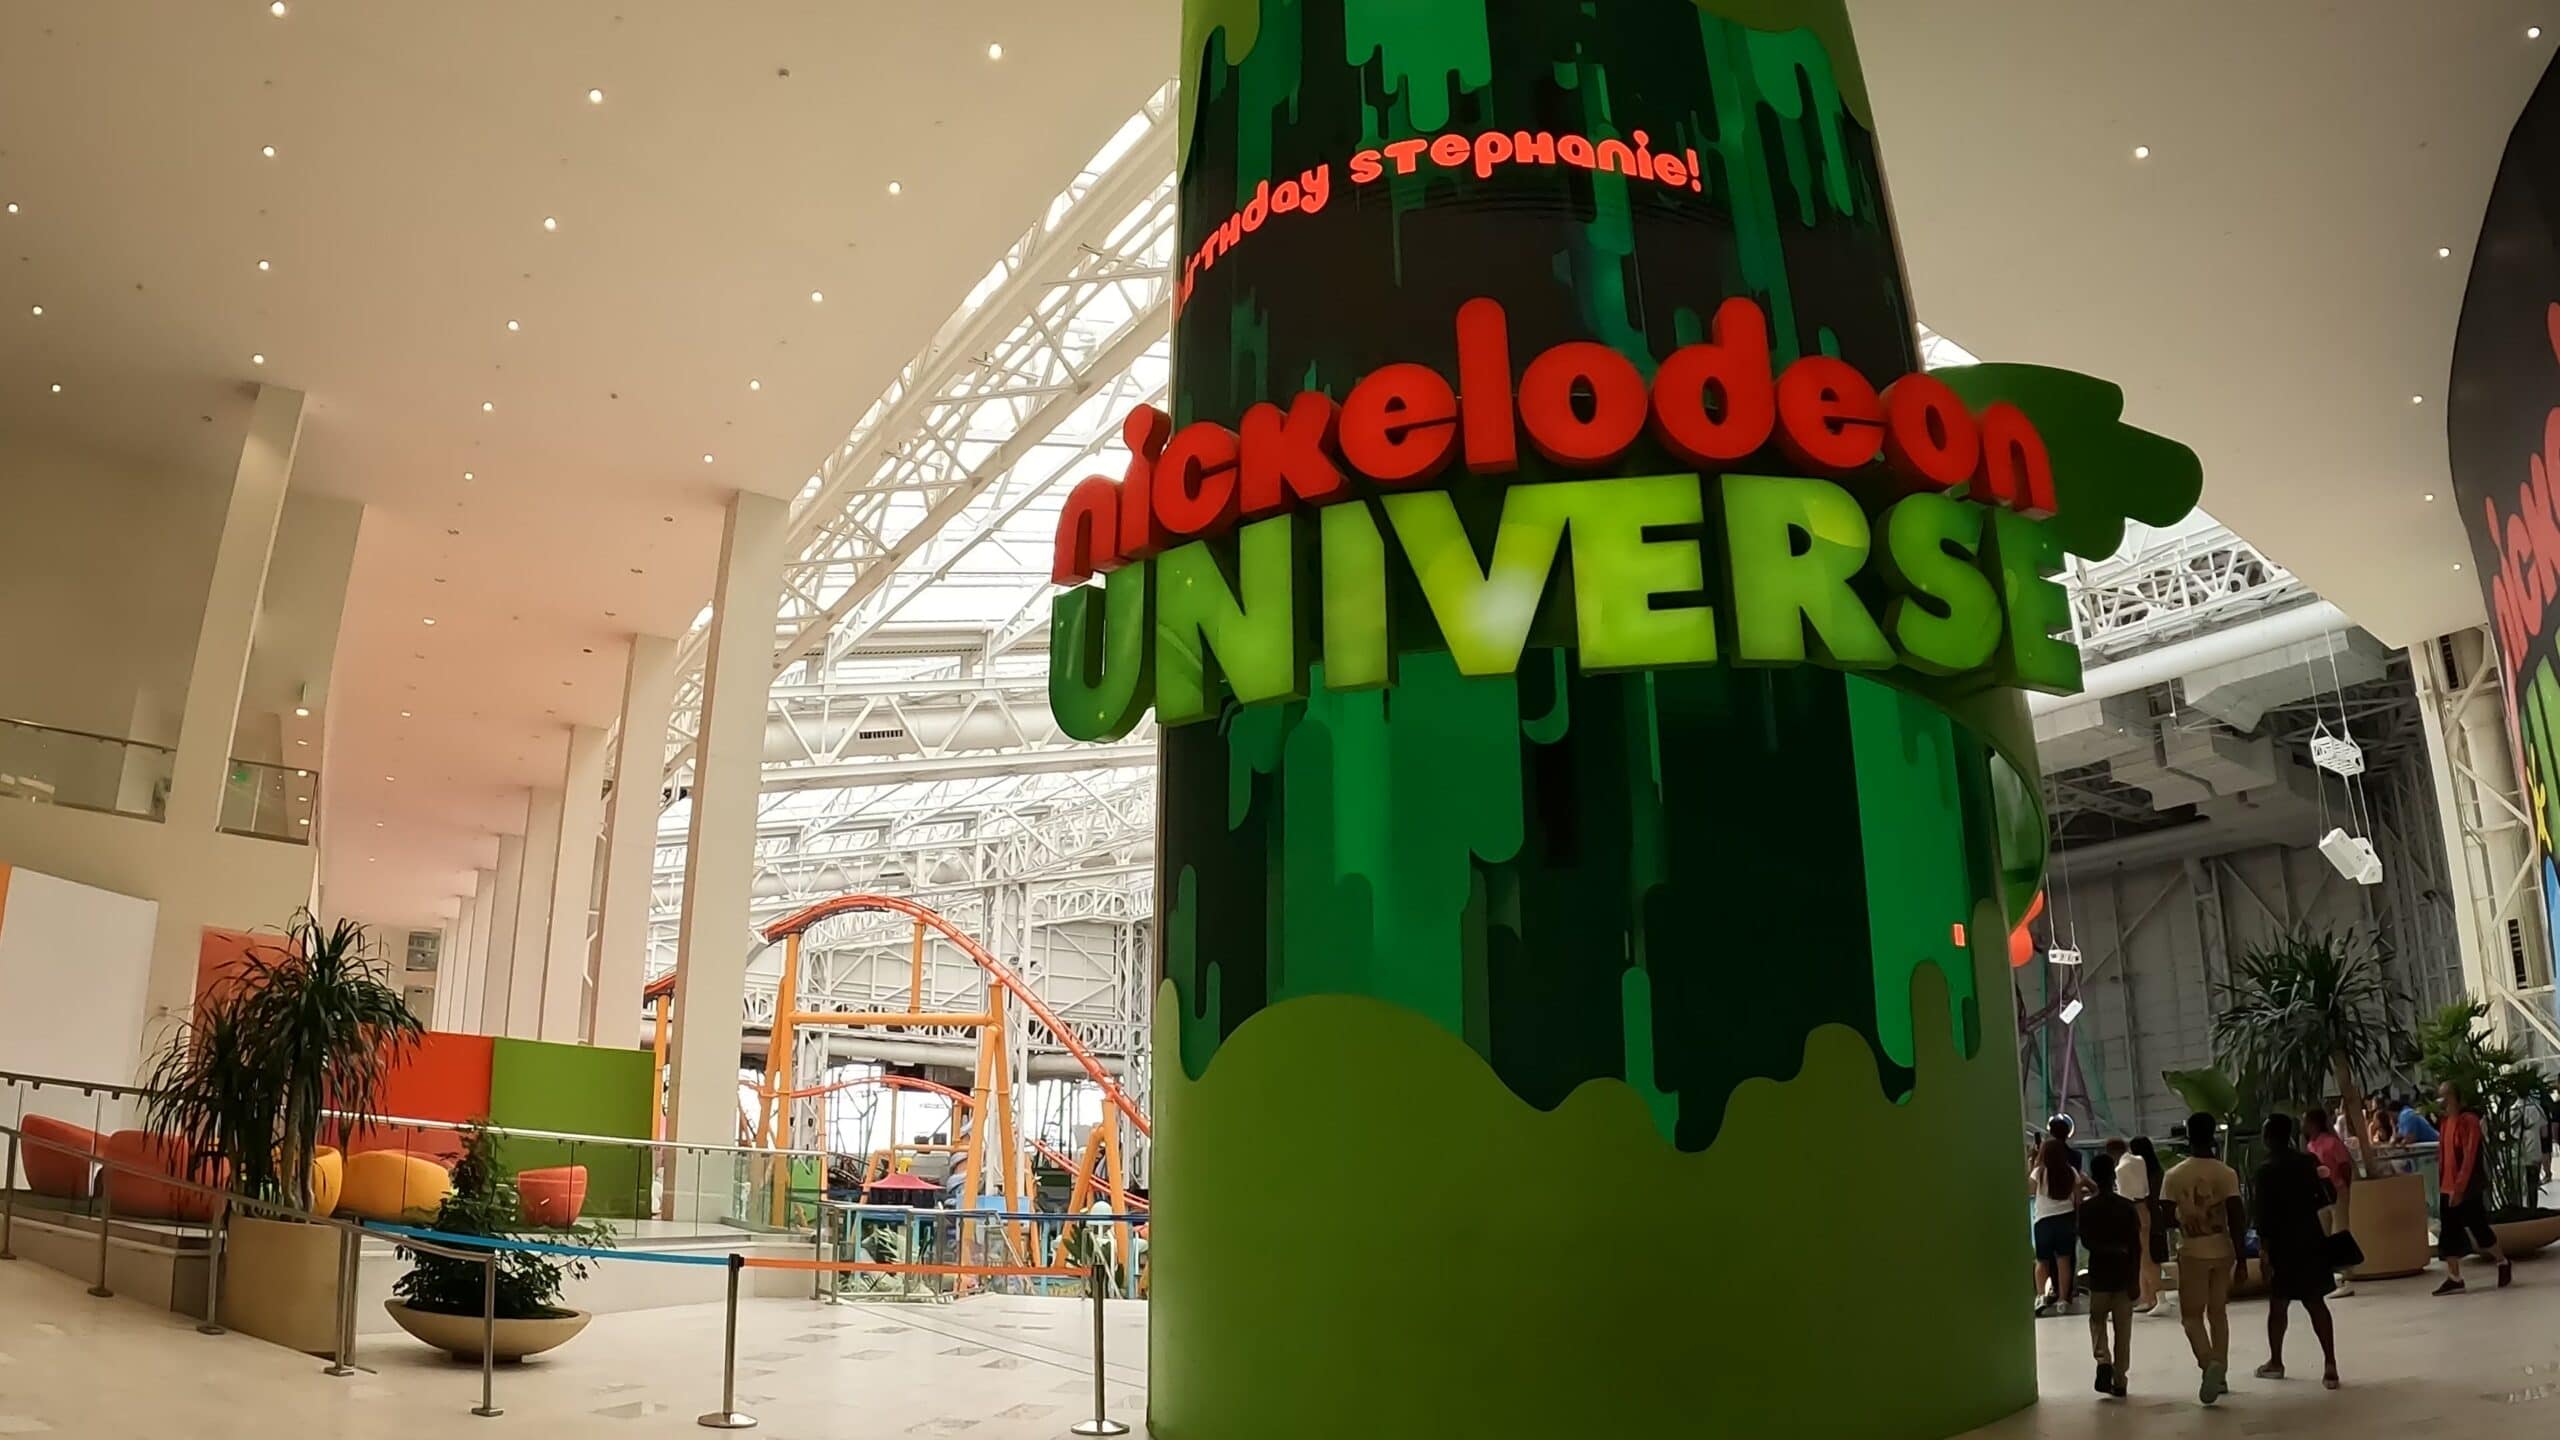 American Dream Mall  Nickelodeon Universe Indoor Park Tips & Tricks